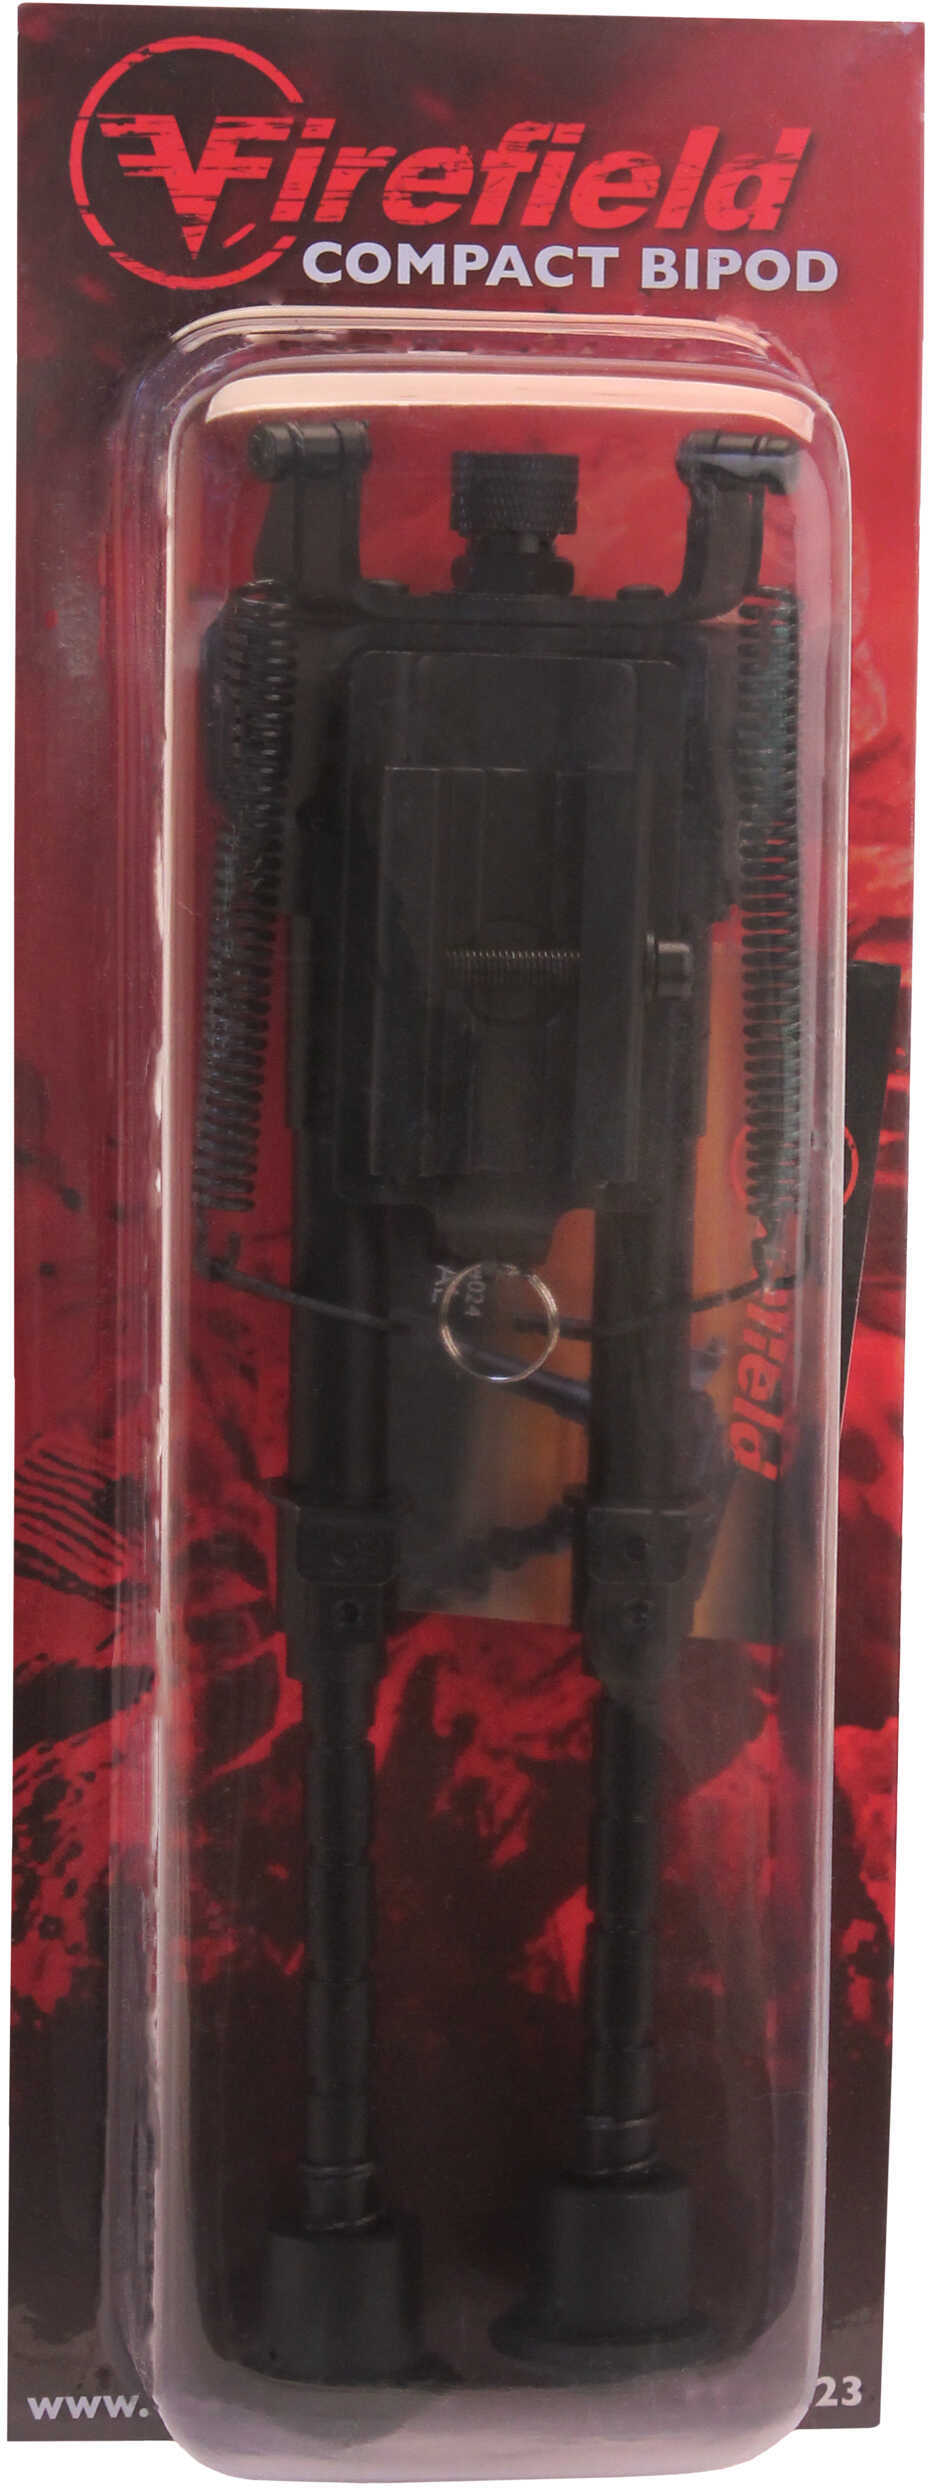 Firefield Compact Bipod, Black Md: FF34023